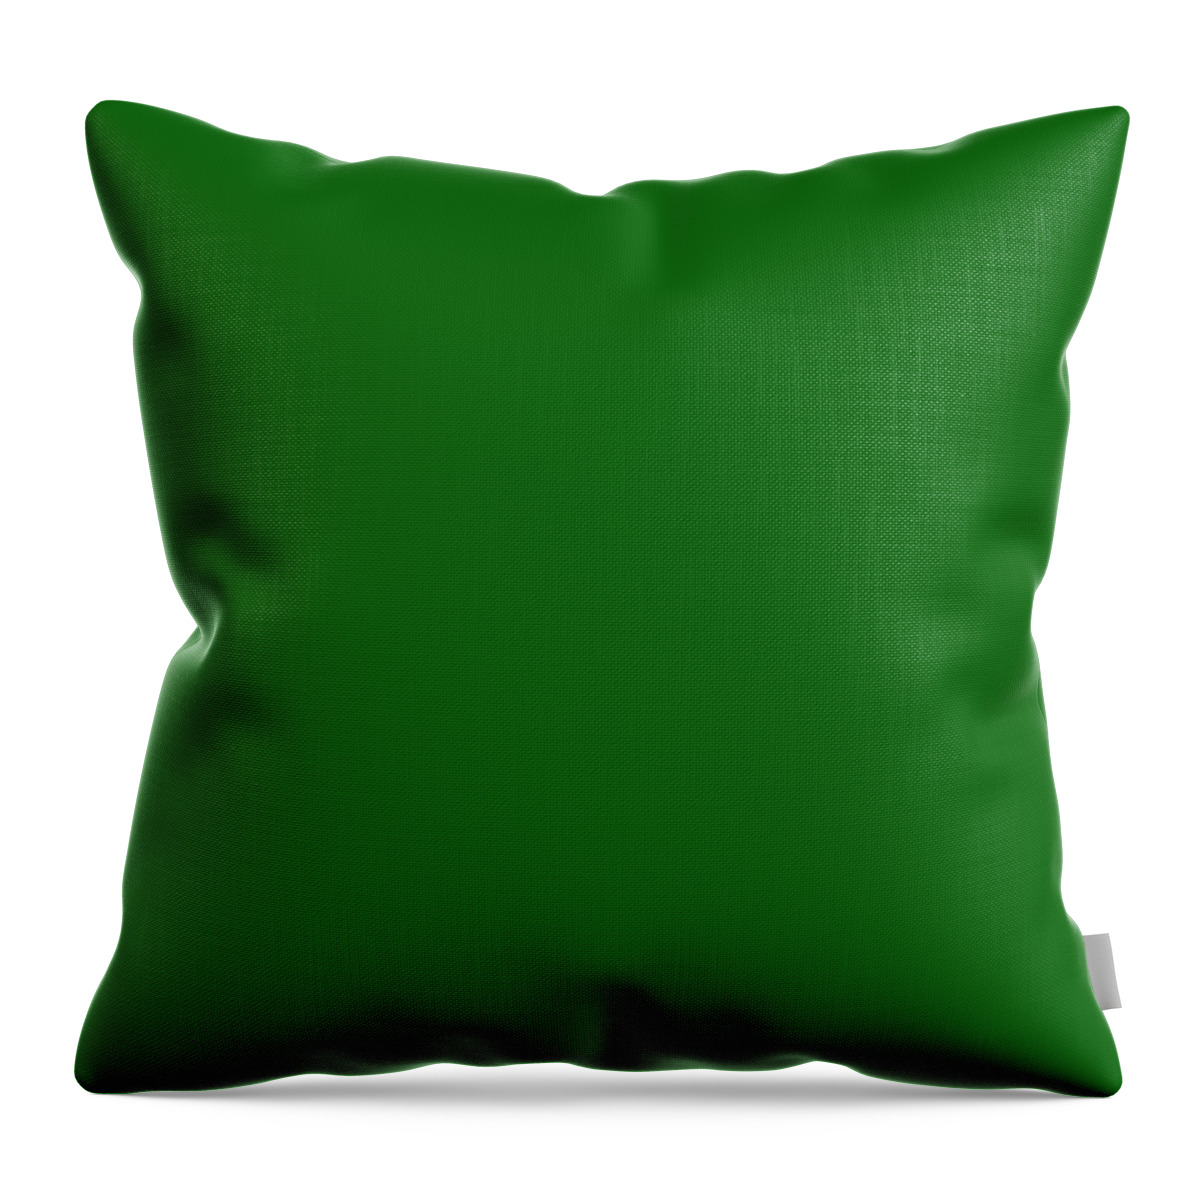 Dark Green Throw Pillow featuring the digital art Dark Green Colour by TintoDesigns